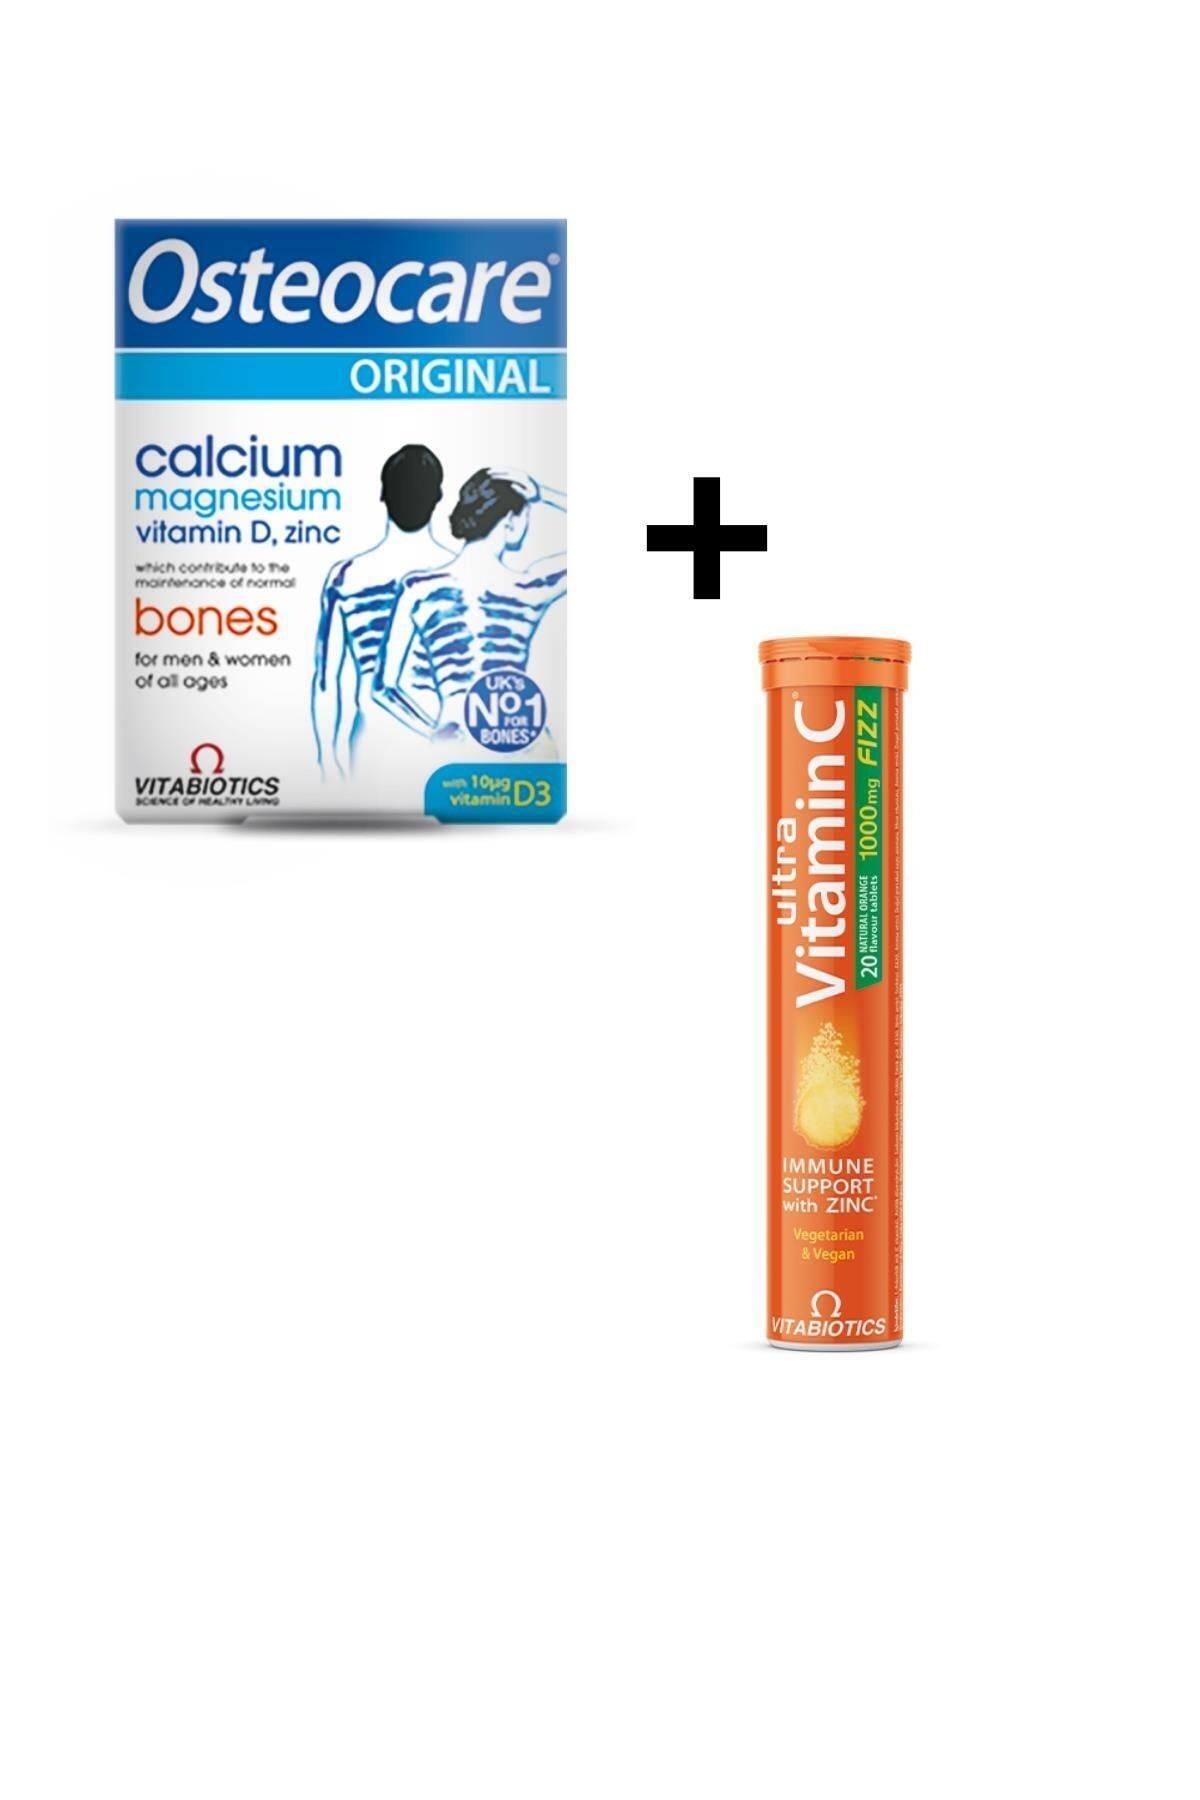 Osteocare Original 90 Tablet Ultra Vitamin C